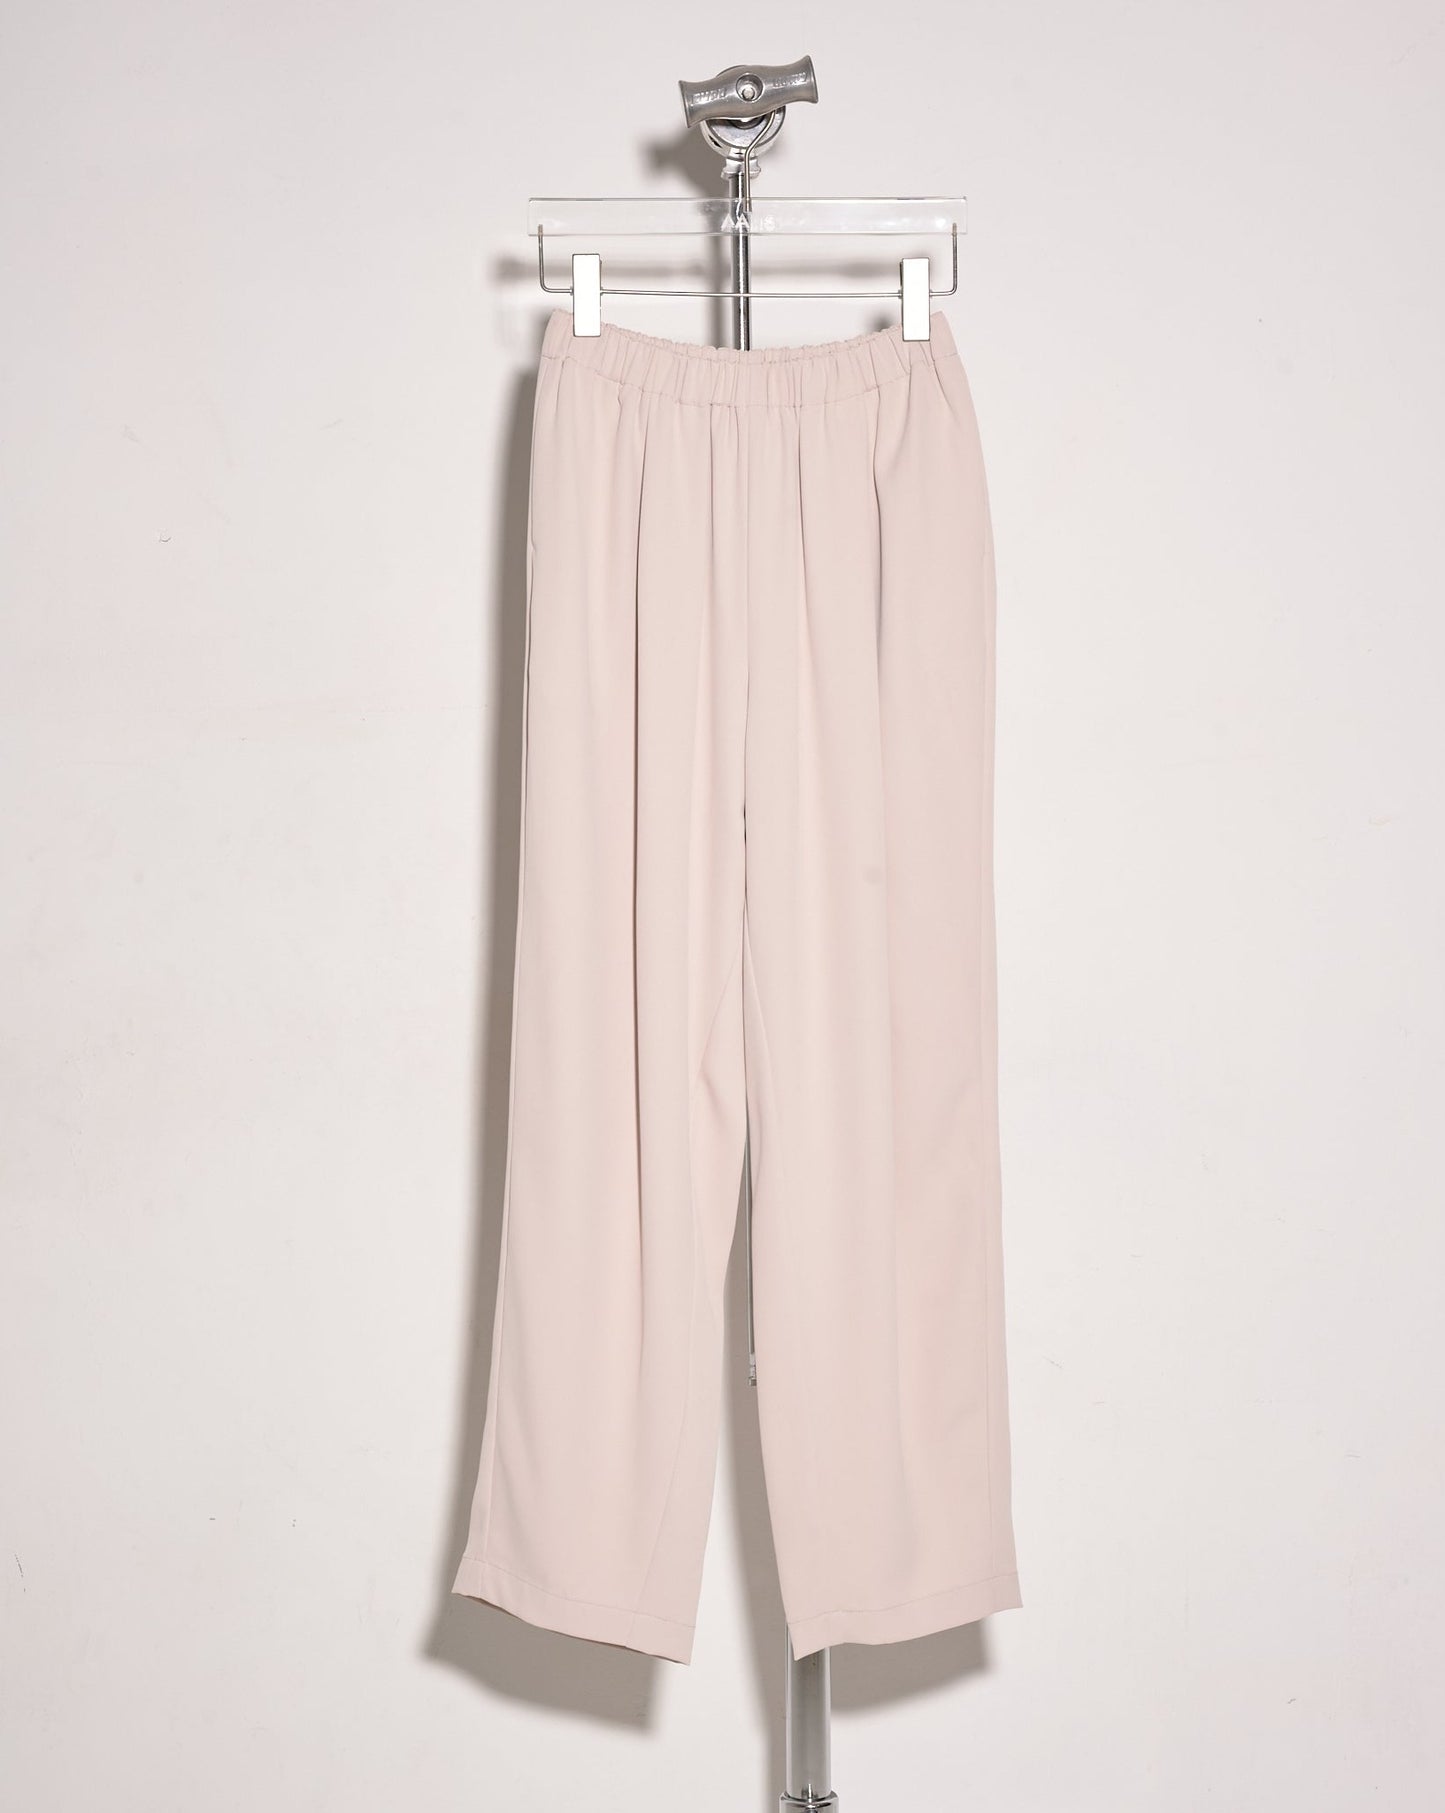 aalis DI comfort straight legs pants (Light beige)